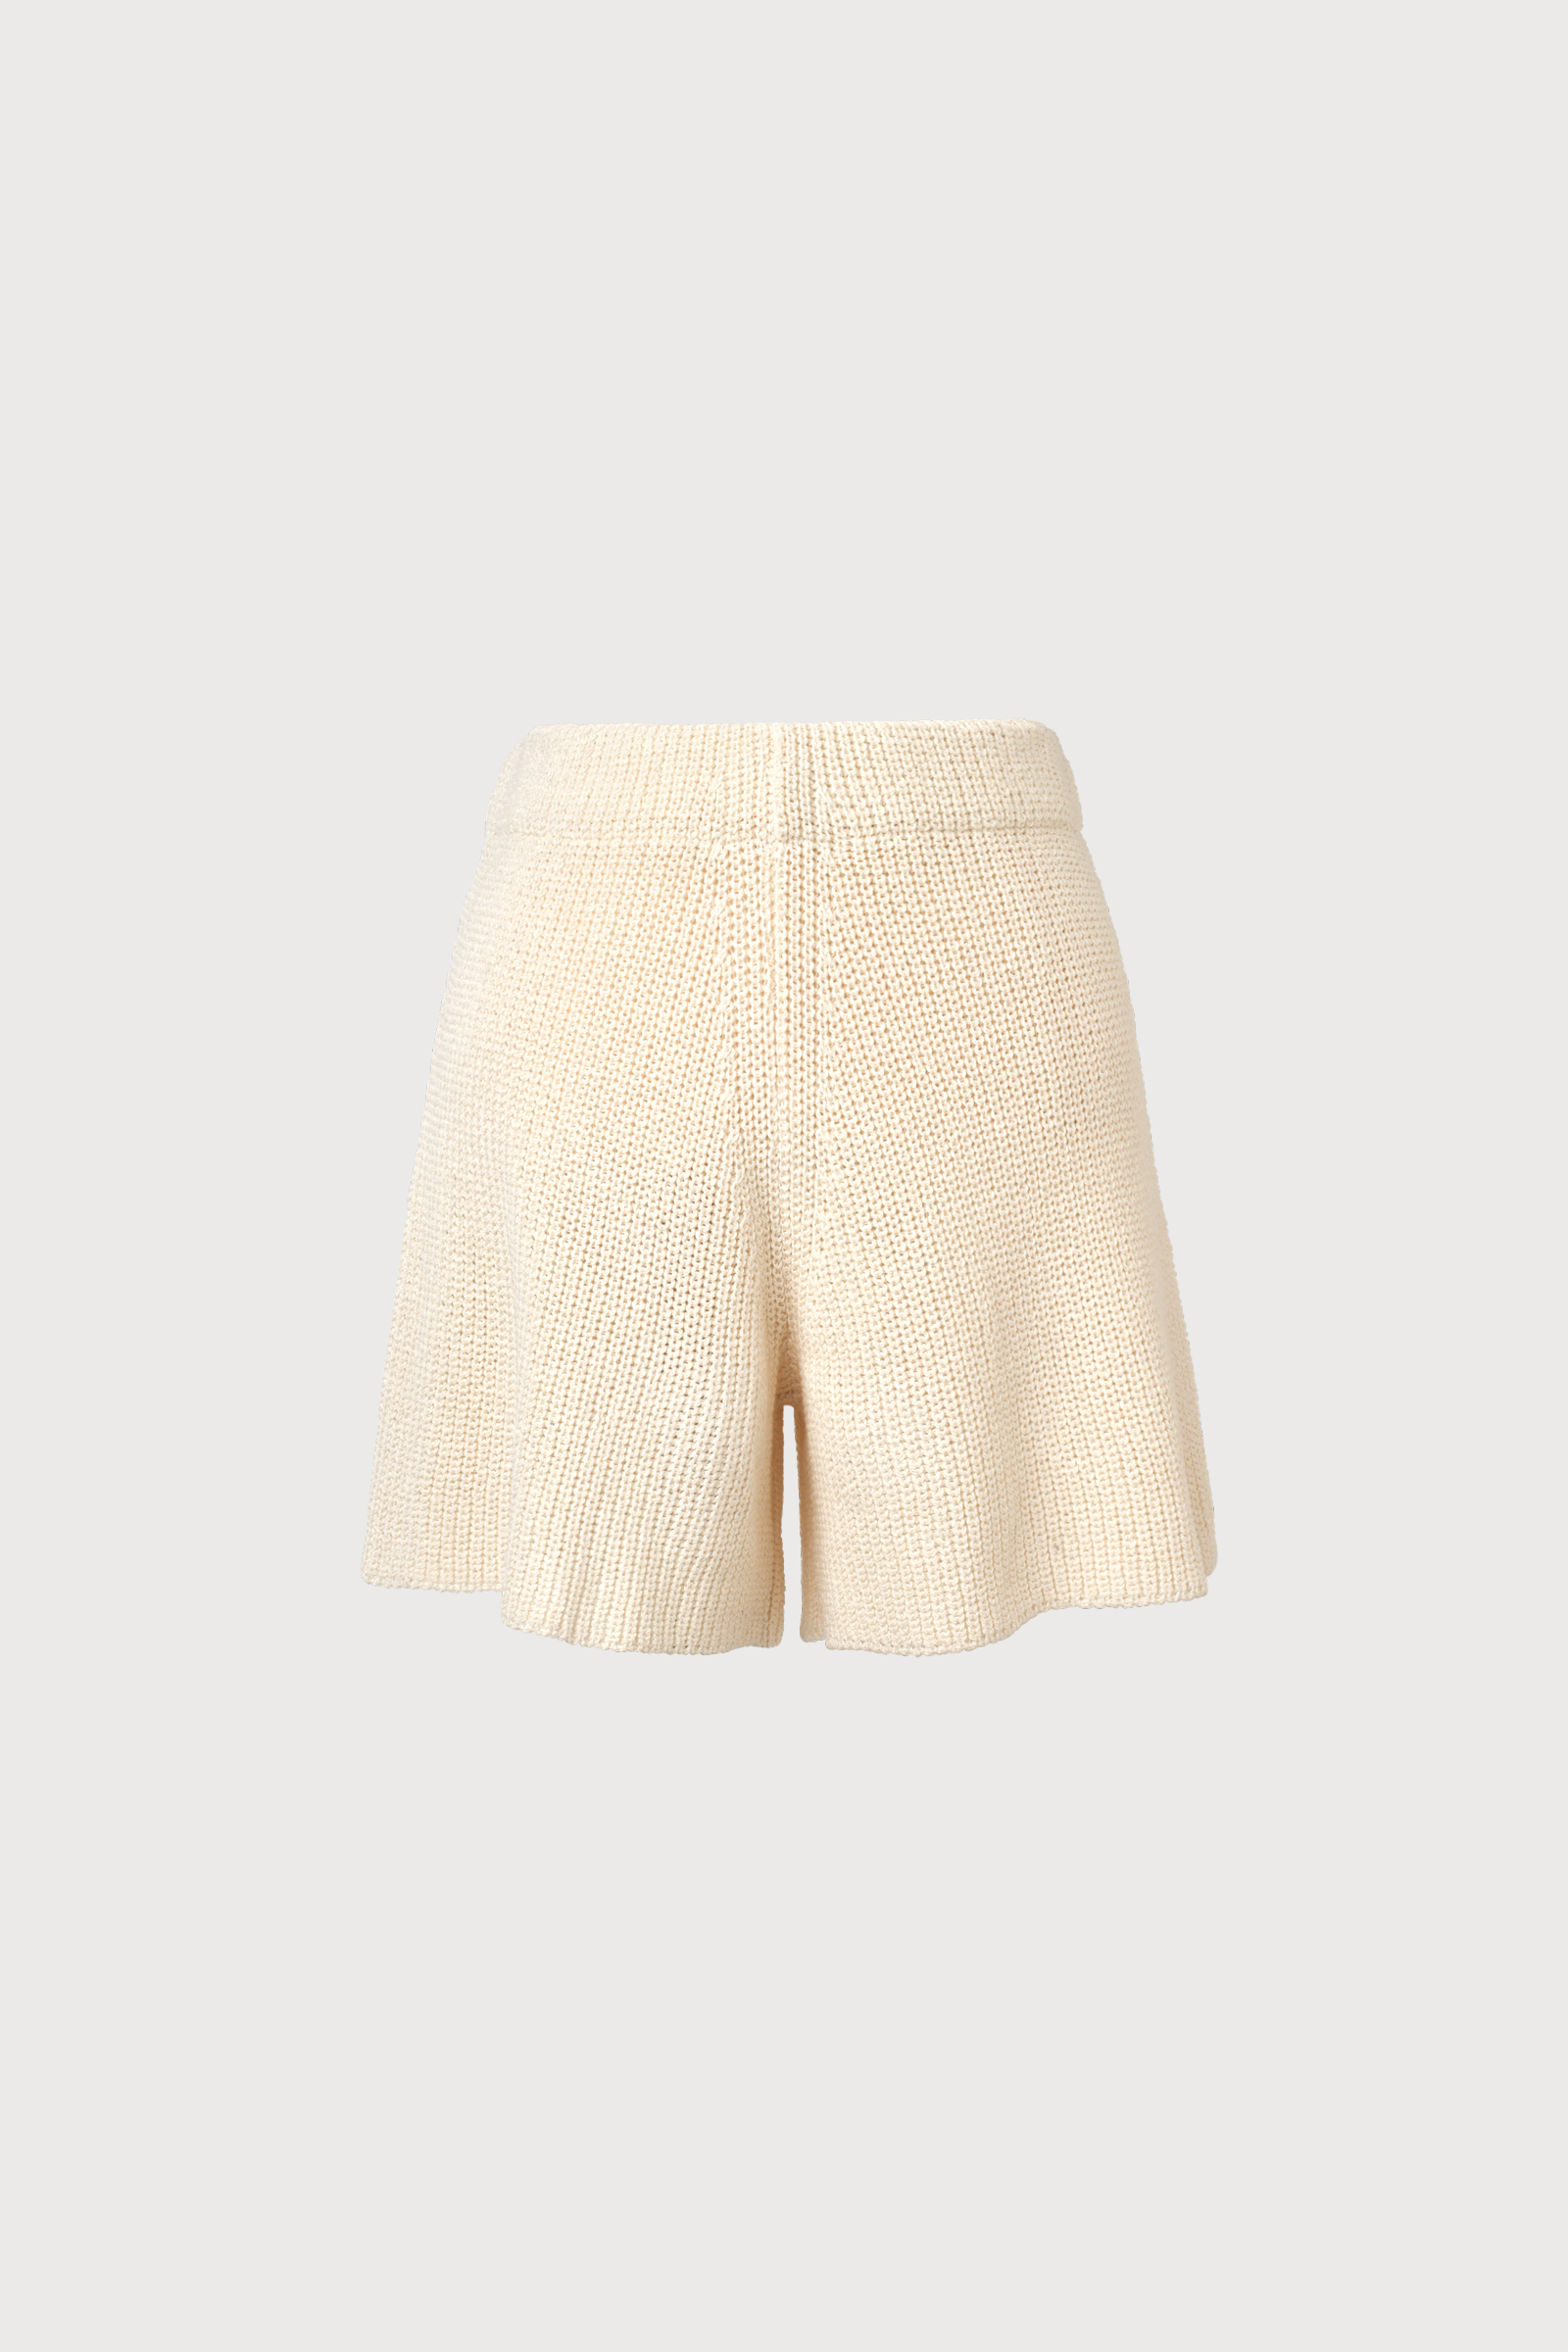 Paper knit shorts (cream/ black)